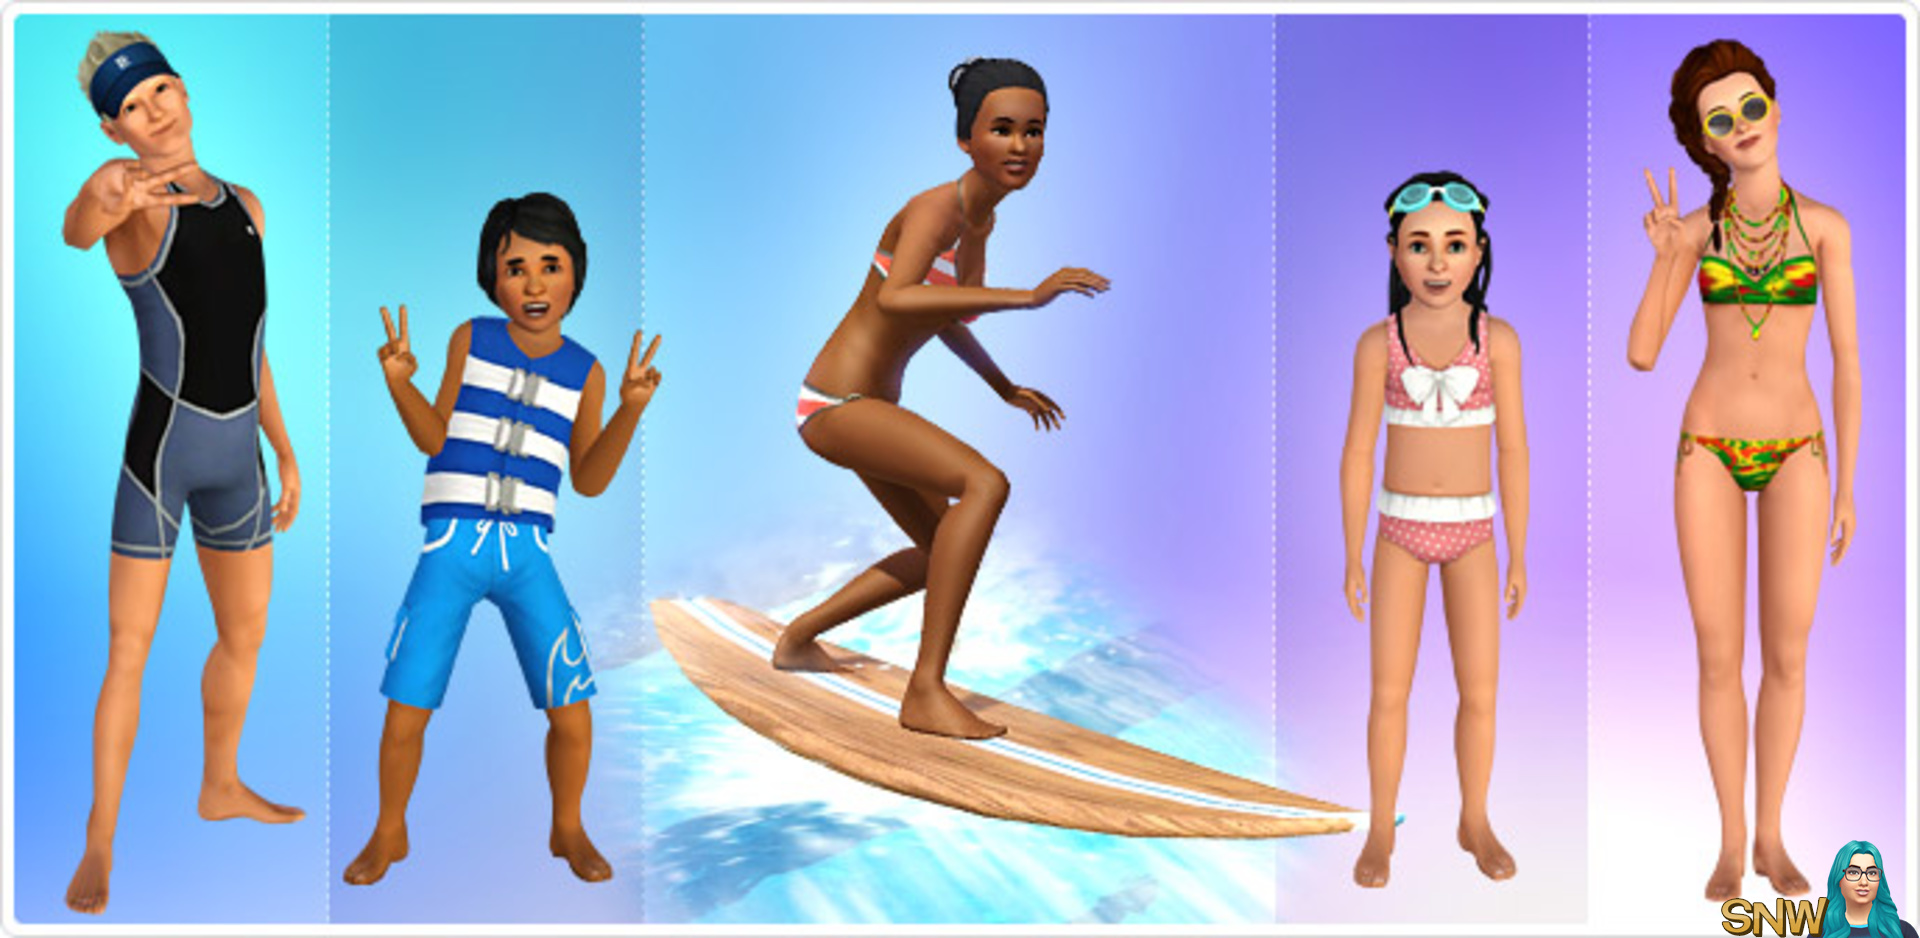 Слайдеры тела. Симс 3 сёрфинг. Симс 4 серфинг. SIMS 3 тело дети. Симс 3 Райские острова одежда.